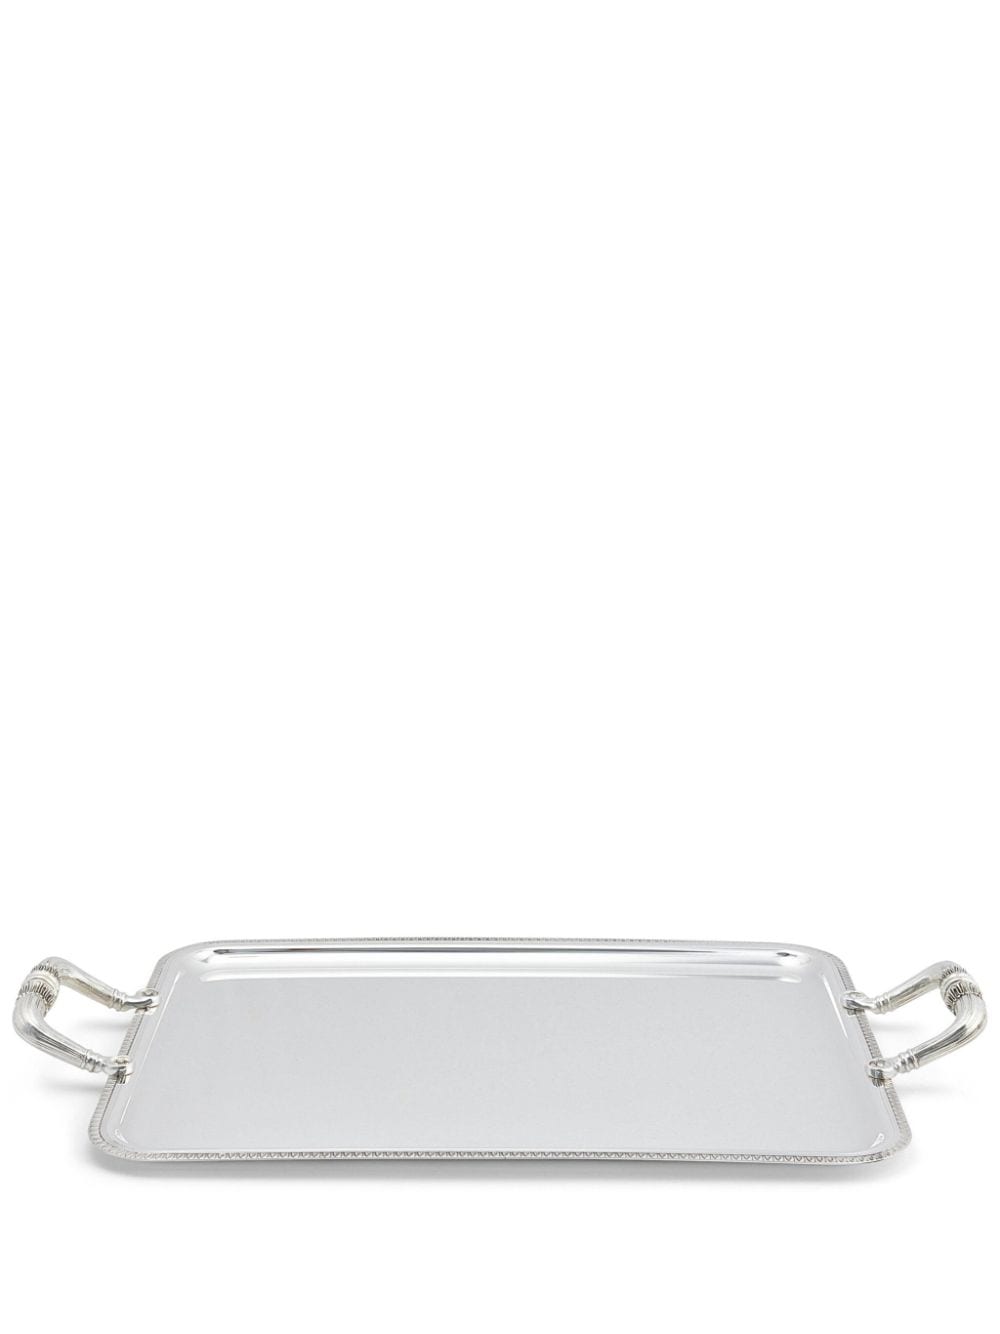 Image 1 of Christofle Malmaison rectangle-shape tray